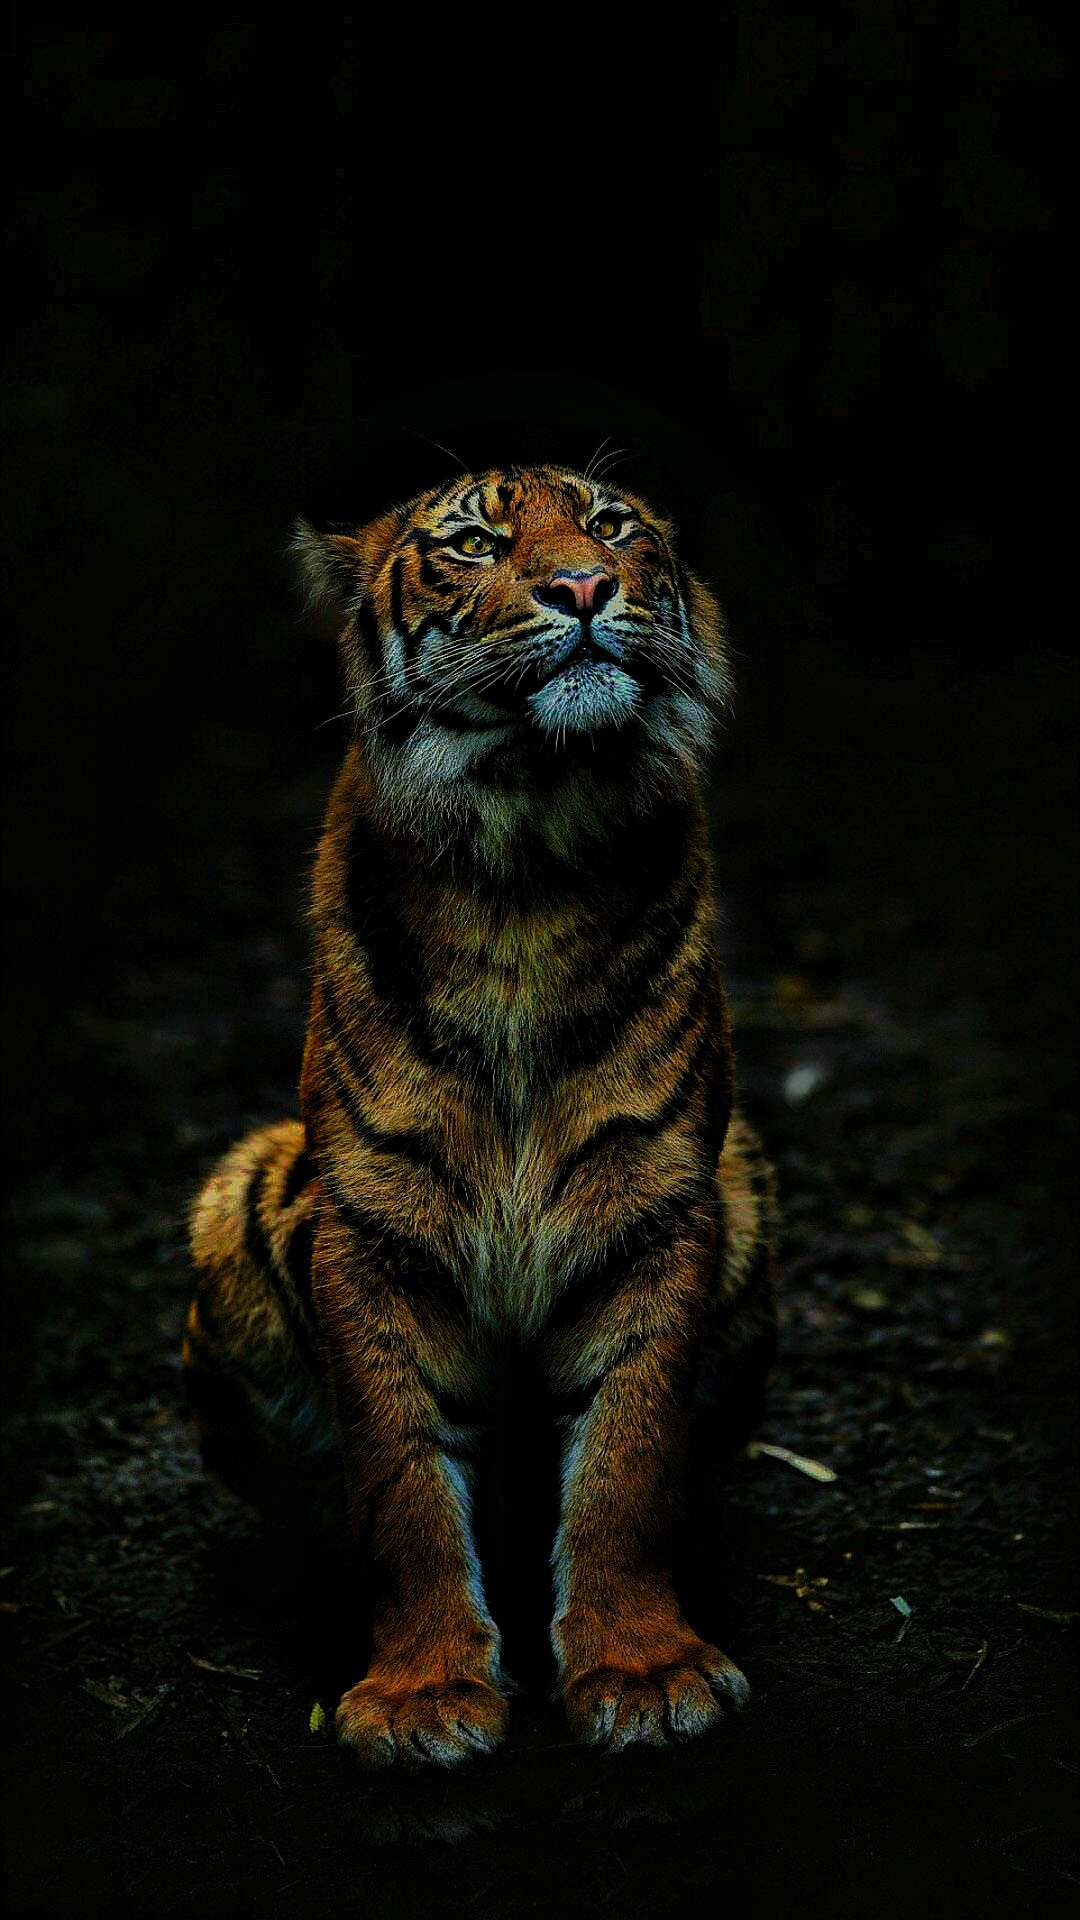 Tiger in Dark iPhone Wallpaper